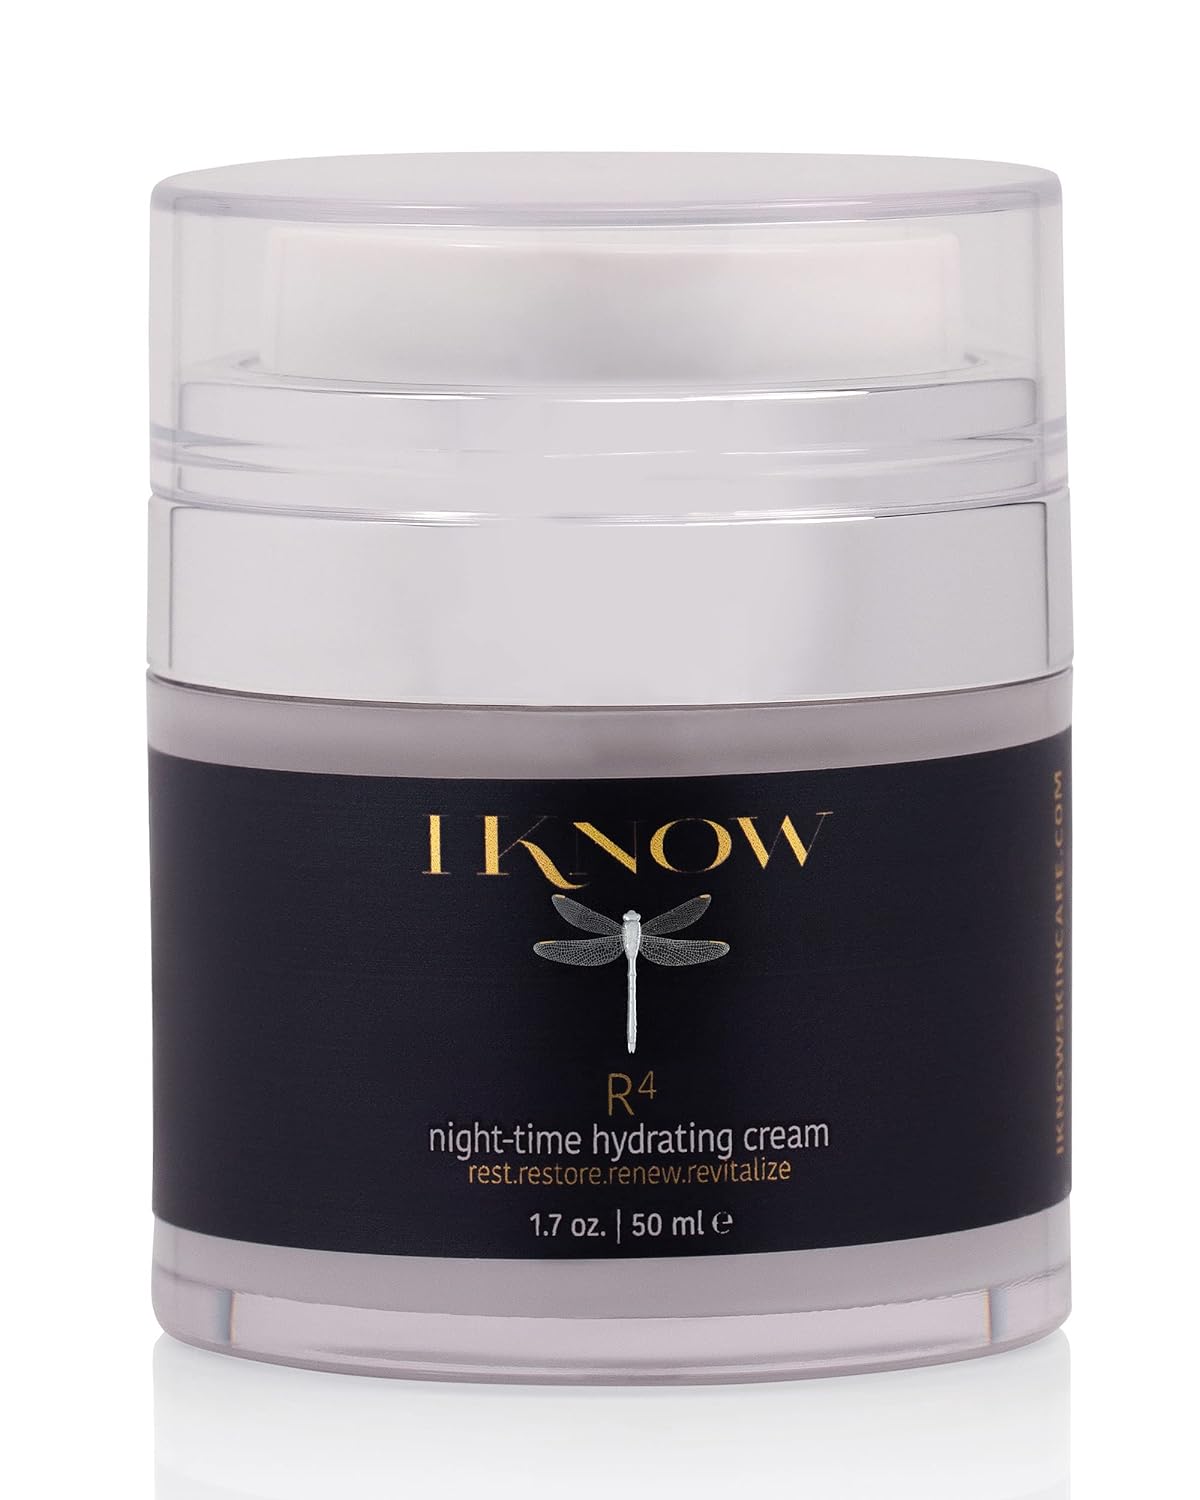 IKNOW R4 Night-Time Hydrating Cream Skincare Rest. Restore. Renew. Revitalize. 1.7